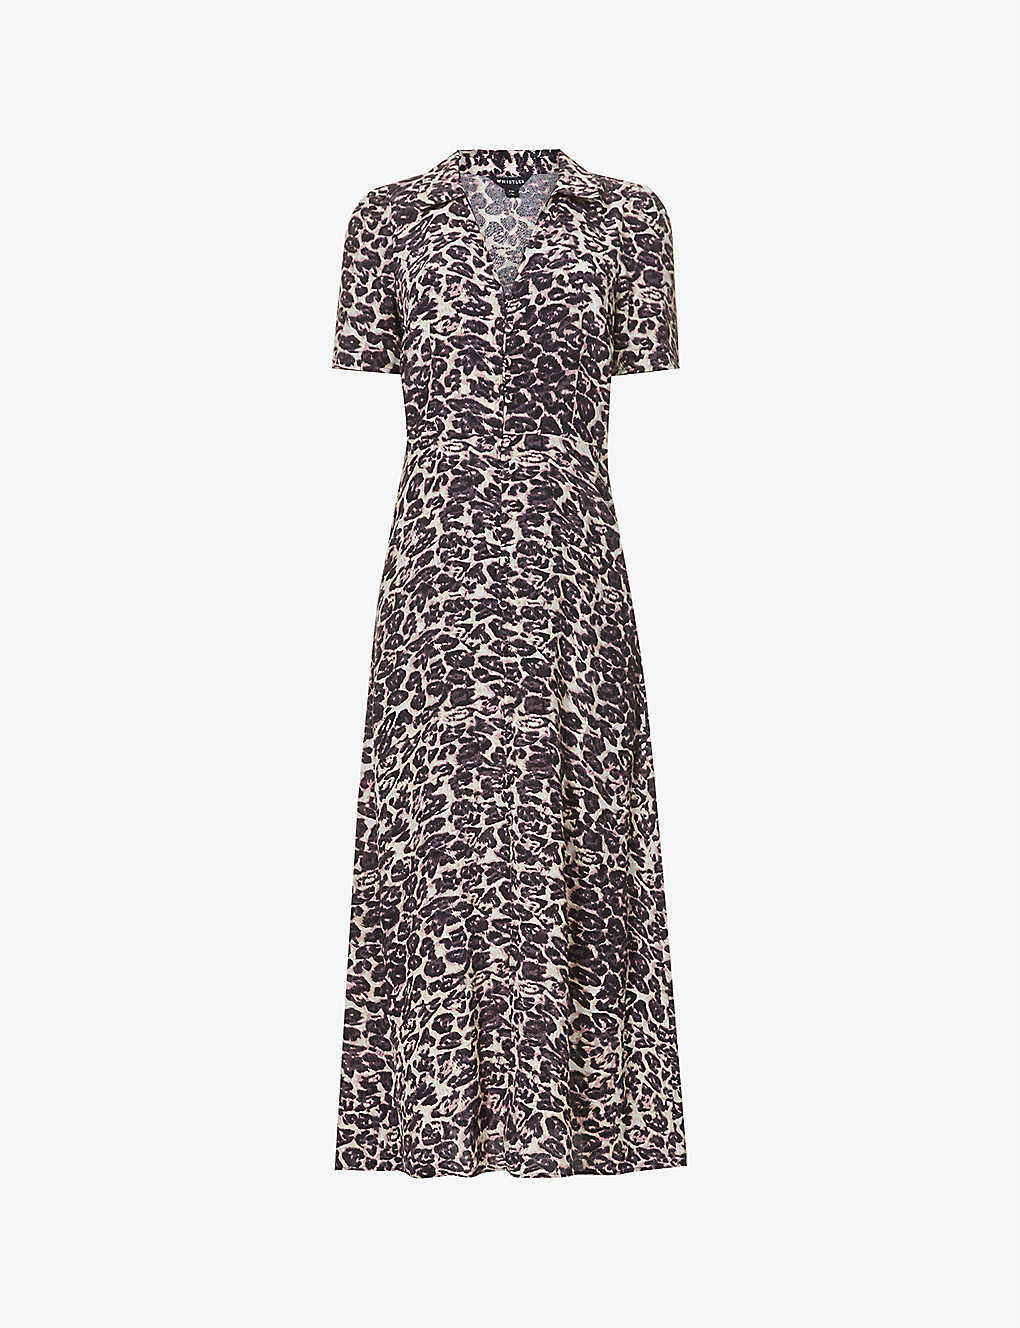 Whistles Womens Multi-coloured Rowan Clouded Leopard Dress 18